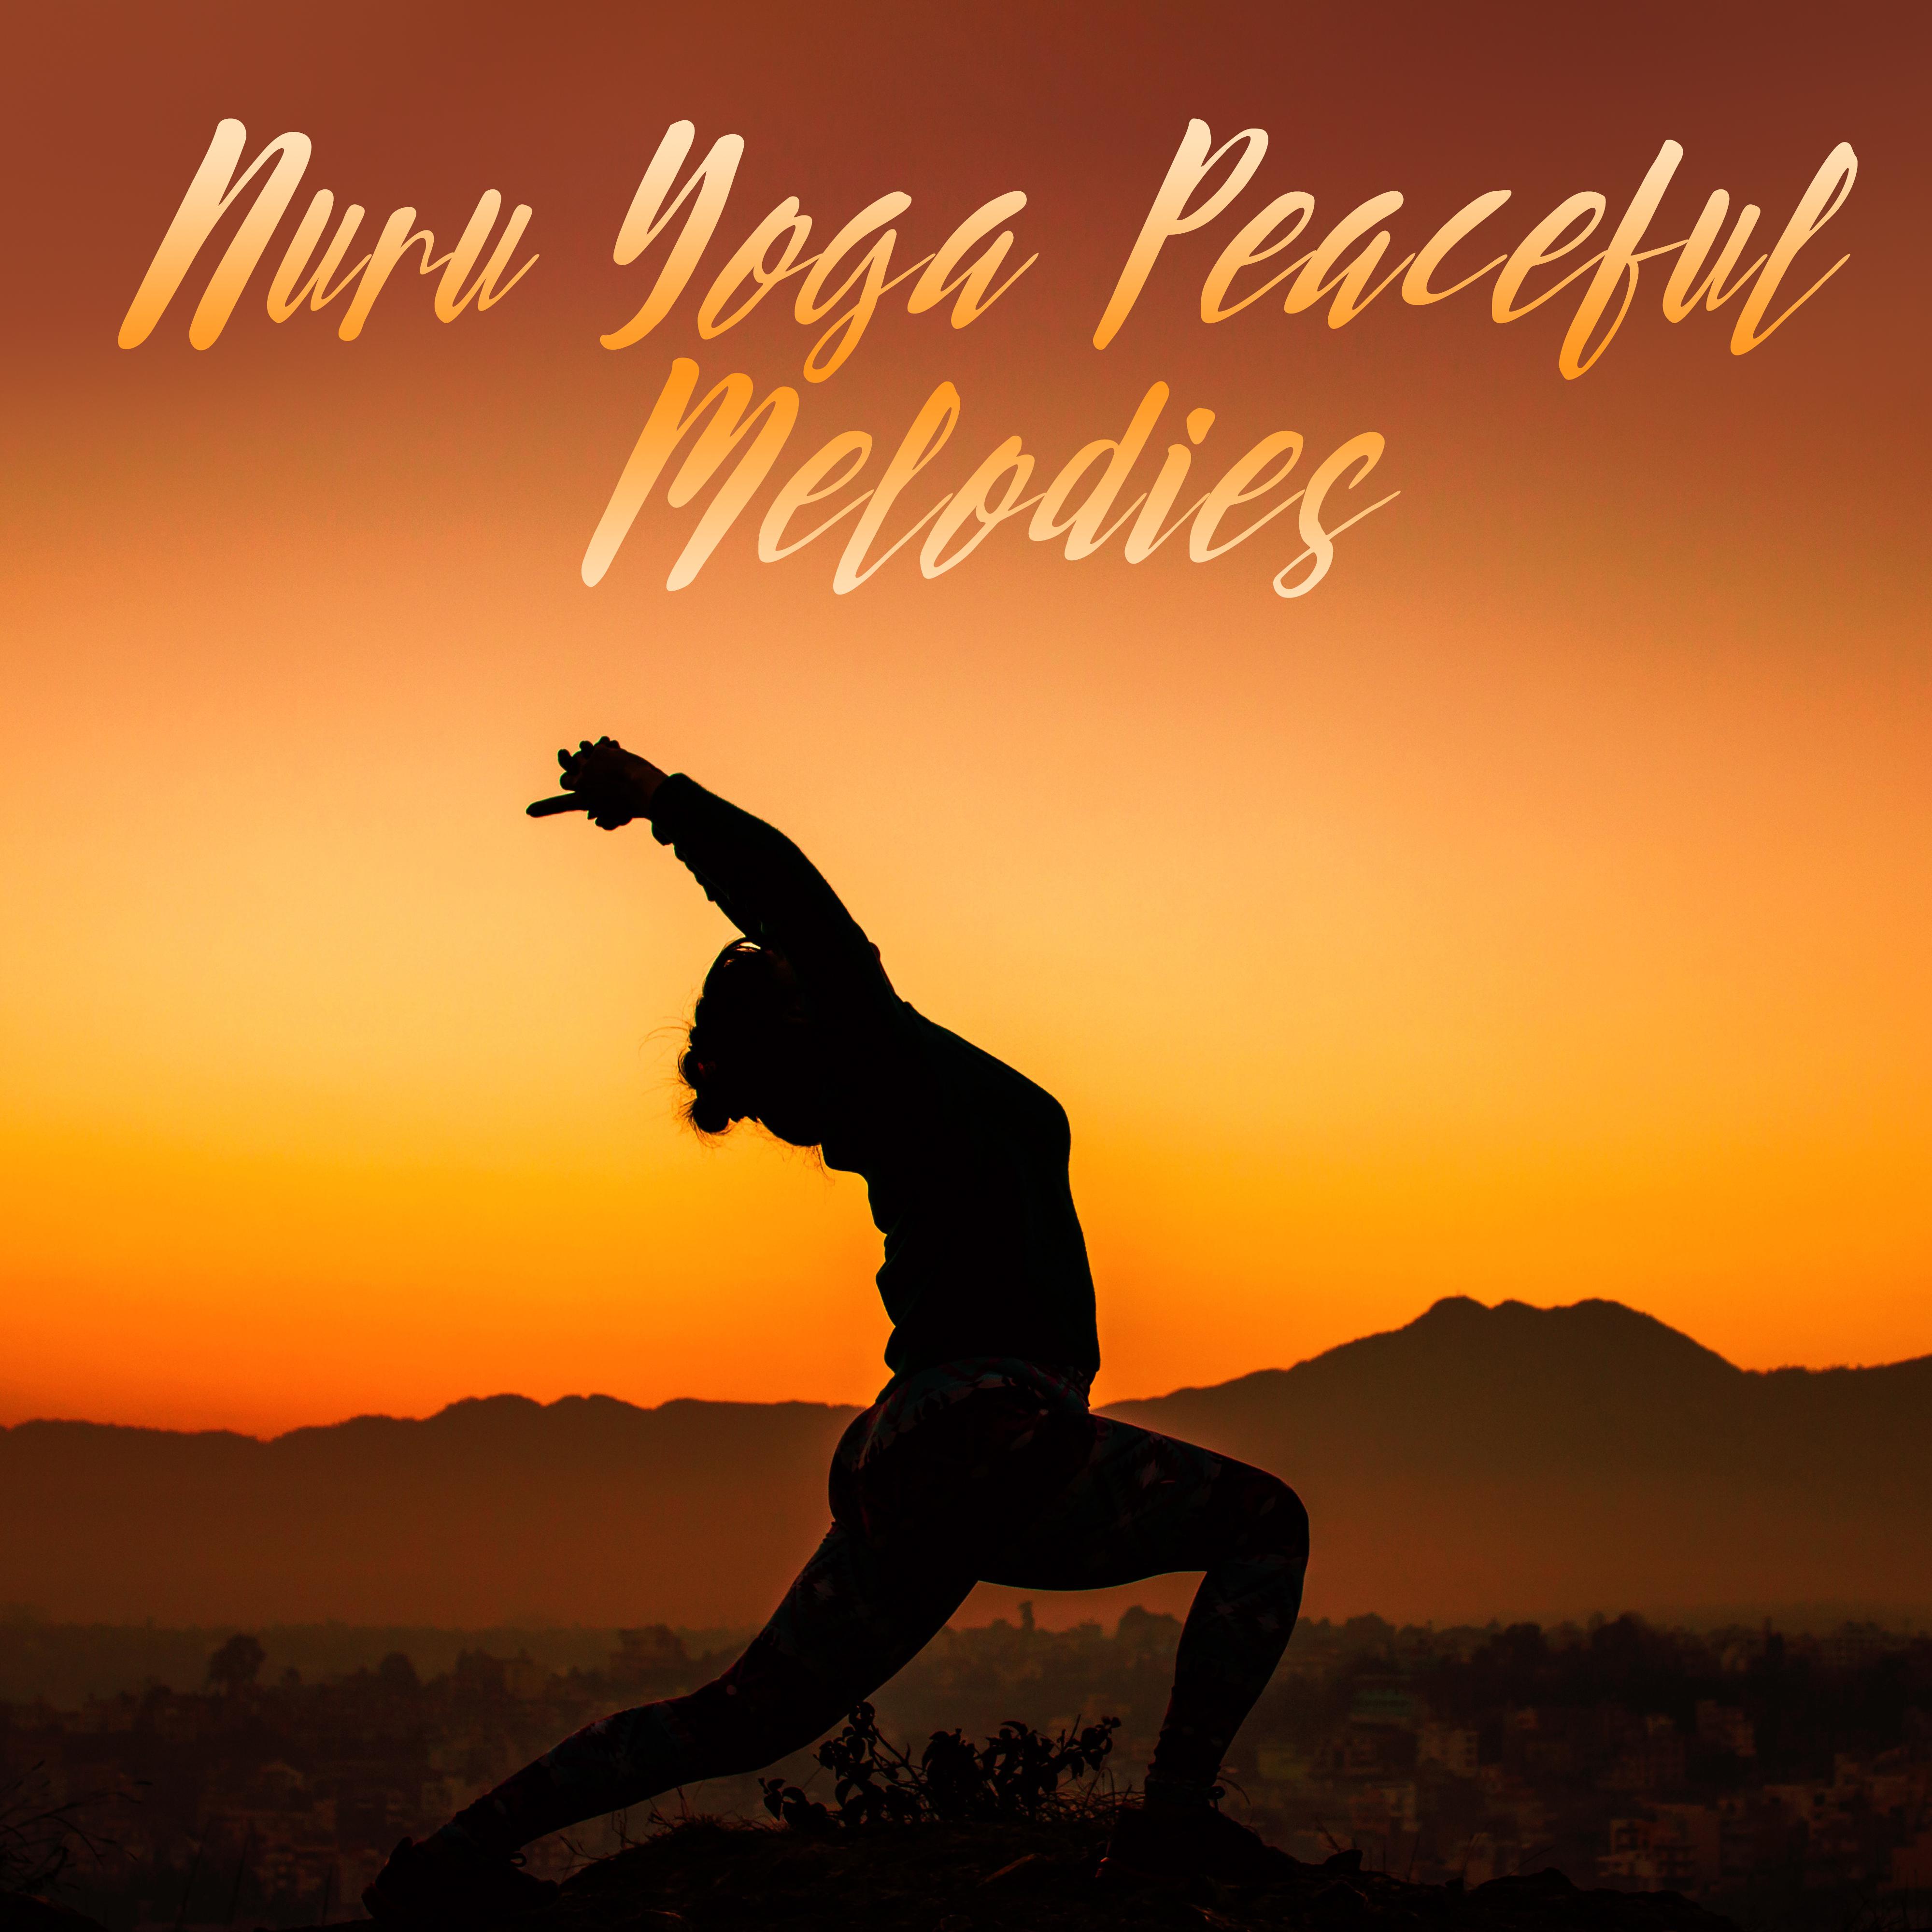 Nuru Yoga Peaceful Melodies: New Age New 2019 Music for Deep Meditation & Relaxation, Chakra Balancing, Sleeping Zen Time